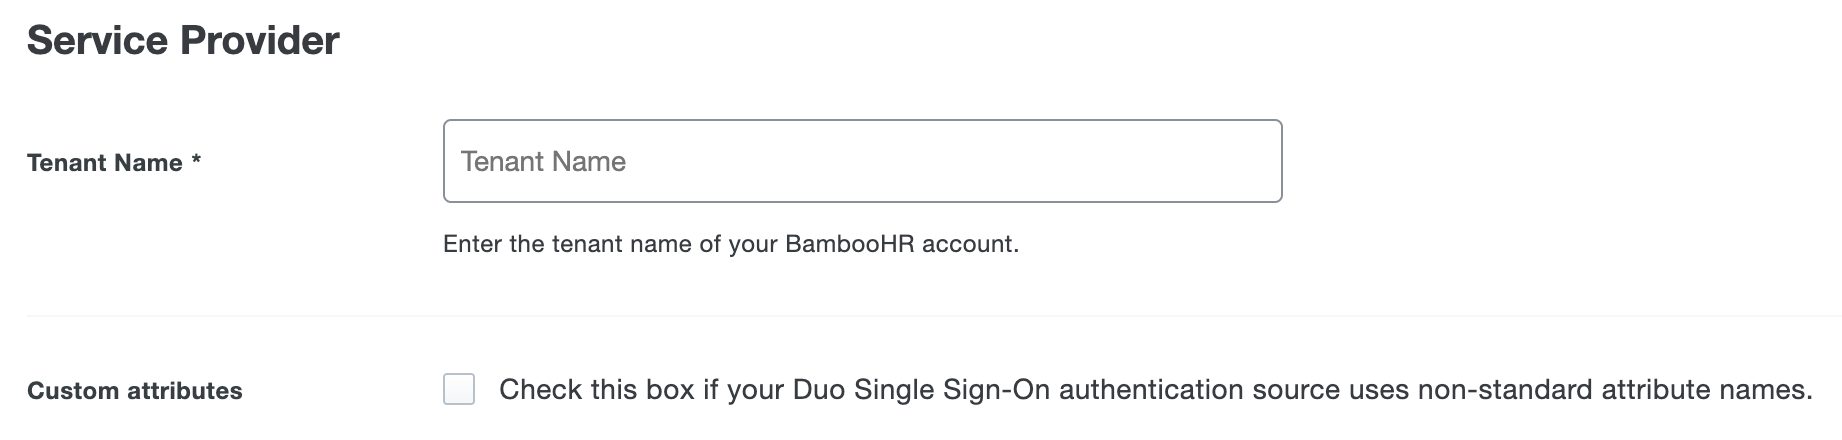 BambooHR Custom Attributes Checkbox